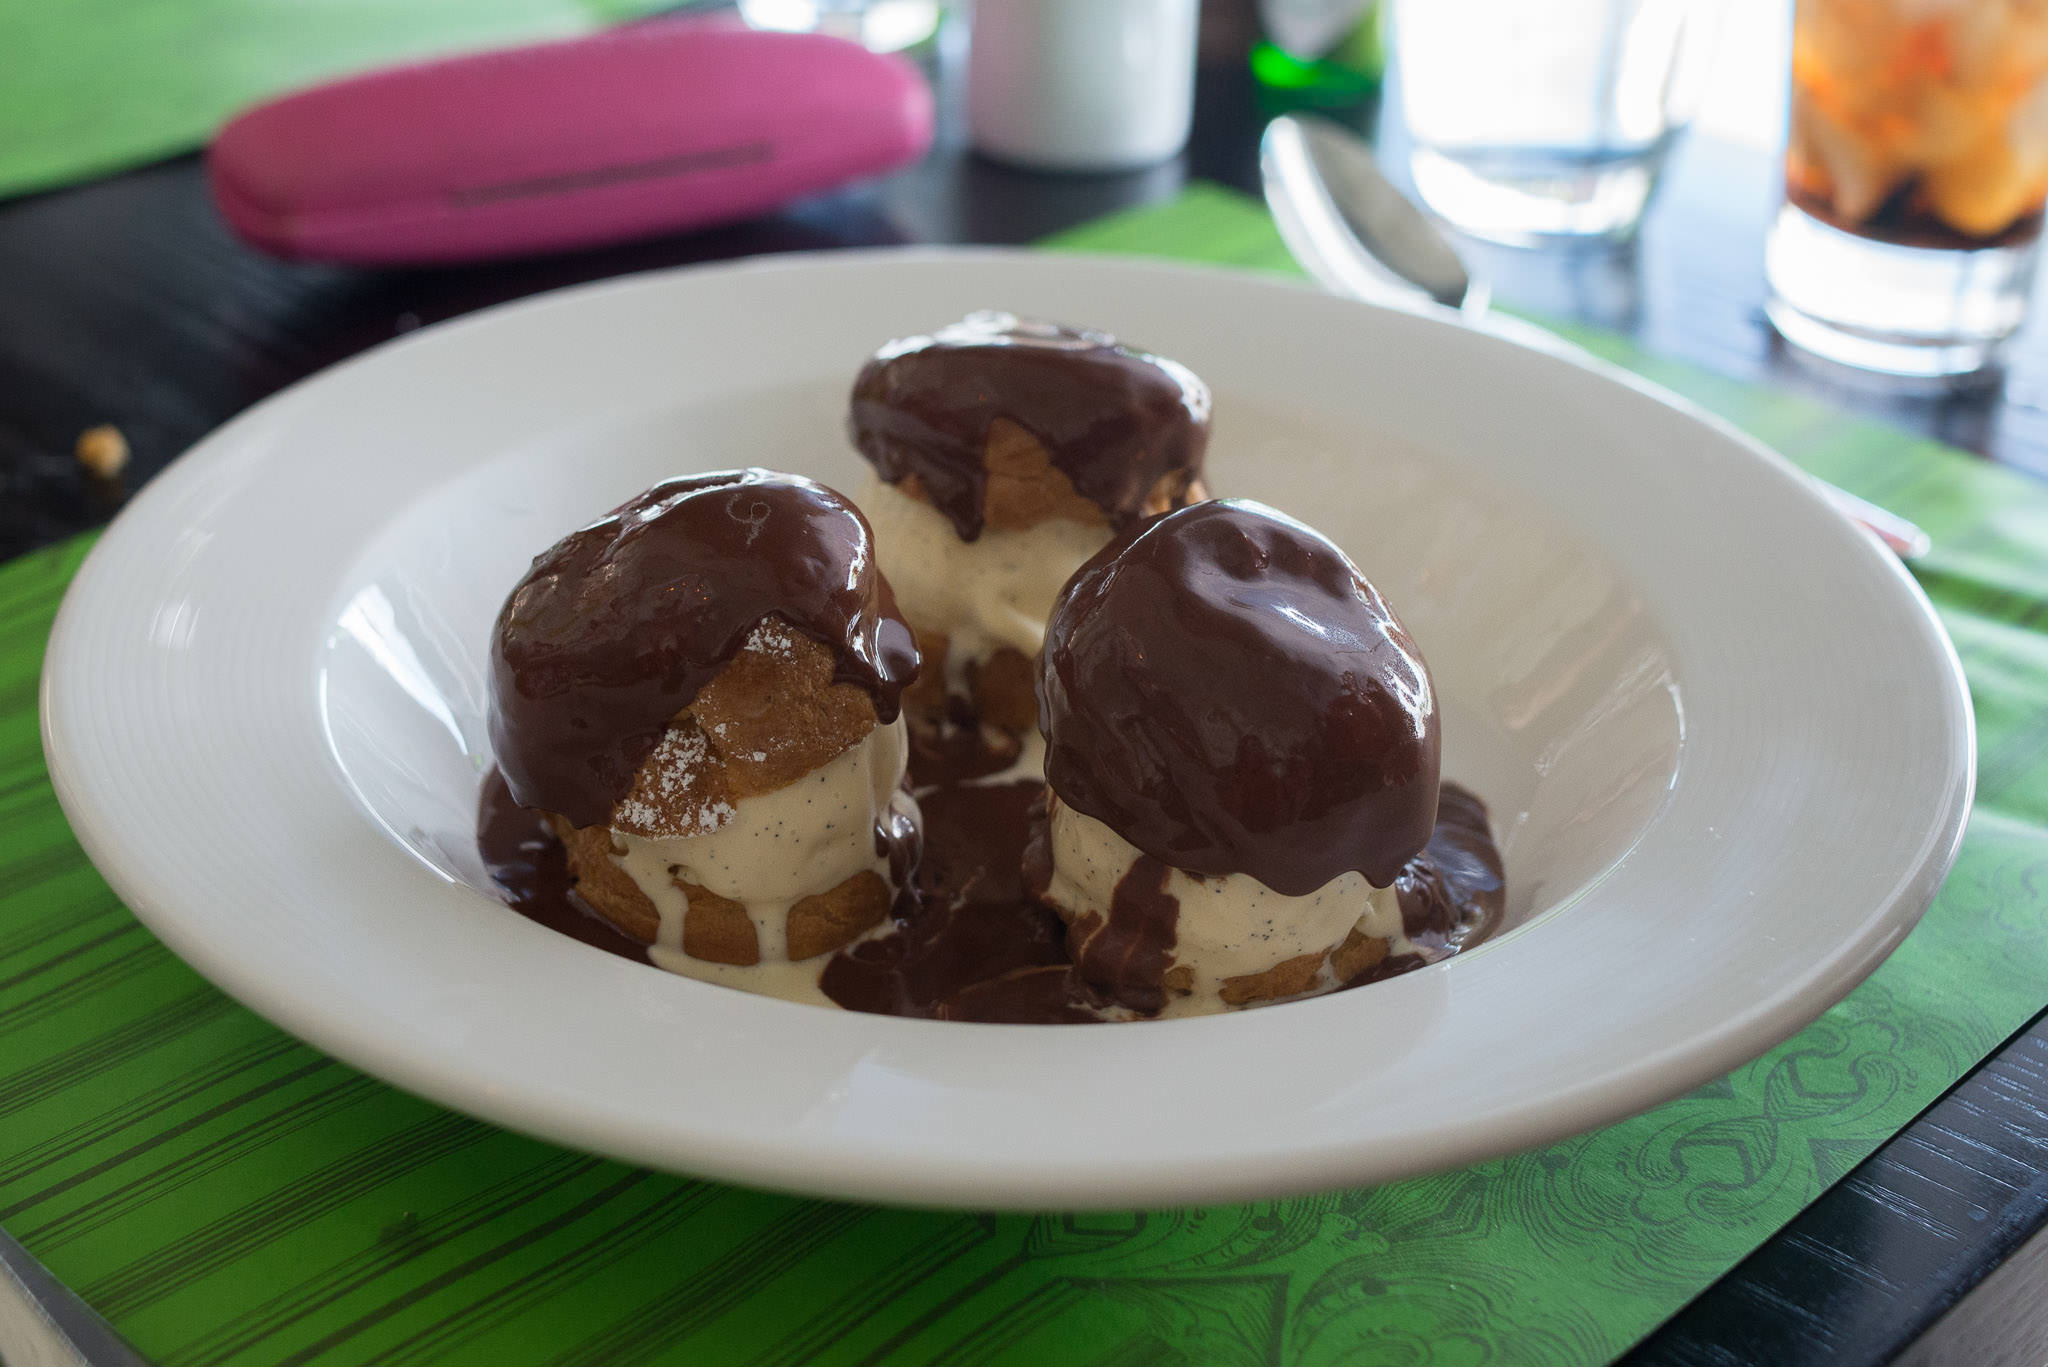 Profiteroles with vanilla bean ice cream and warm chocolate sauce (AU$18)